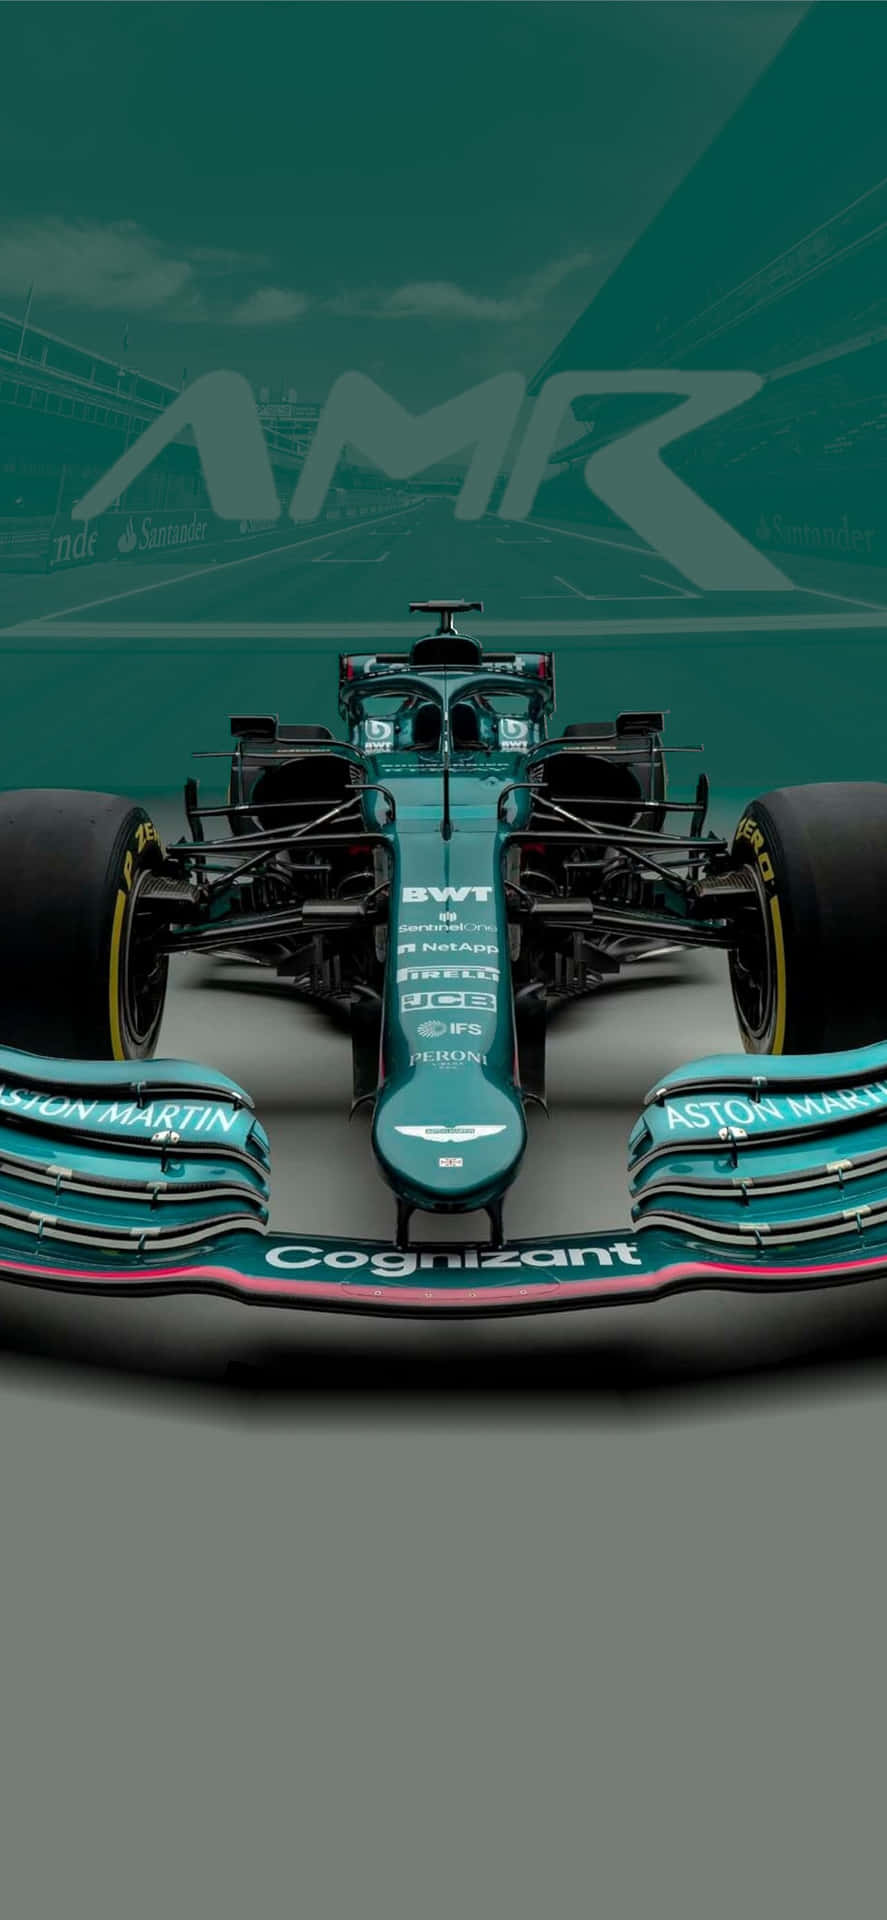 Den seneste teknologi i aktion - Formel 1 Iphone Cover Wallpaper